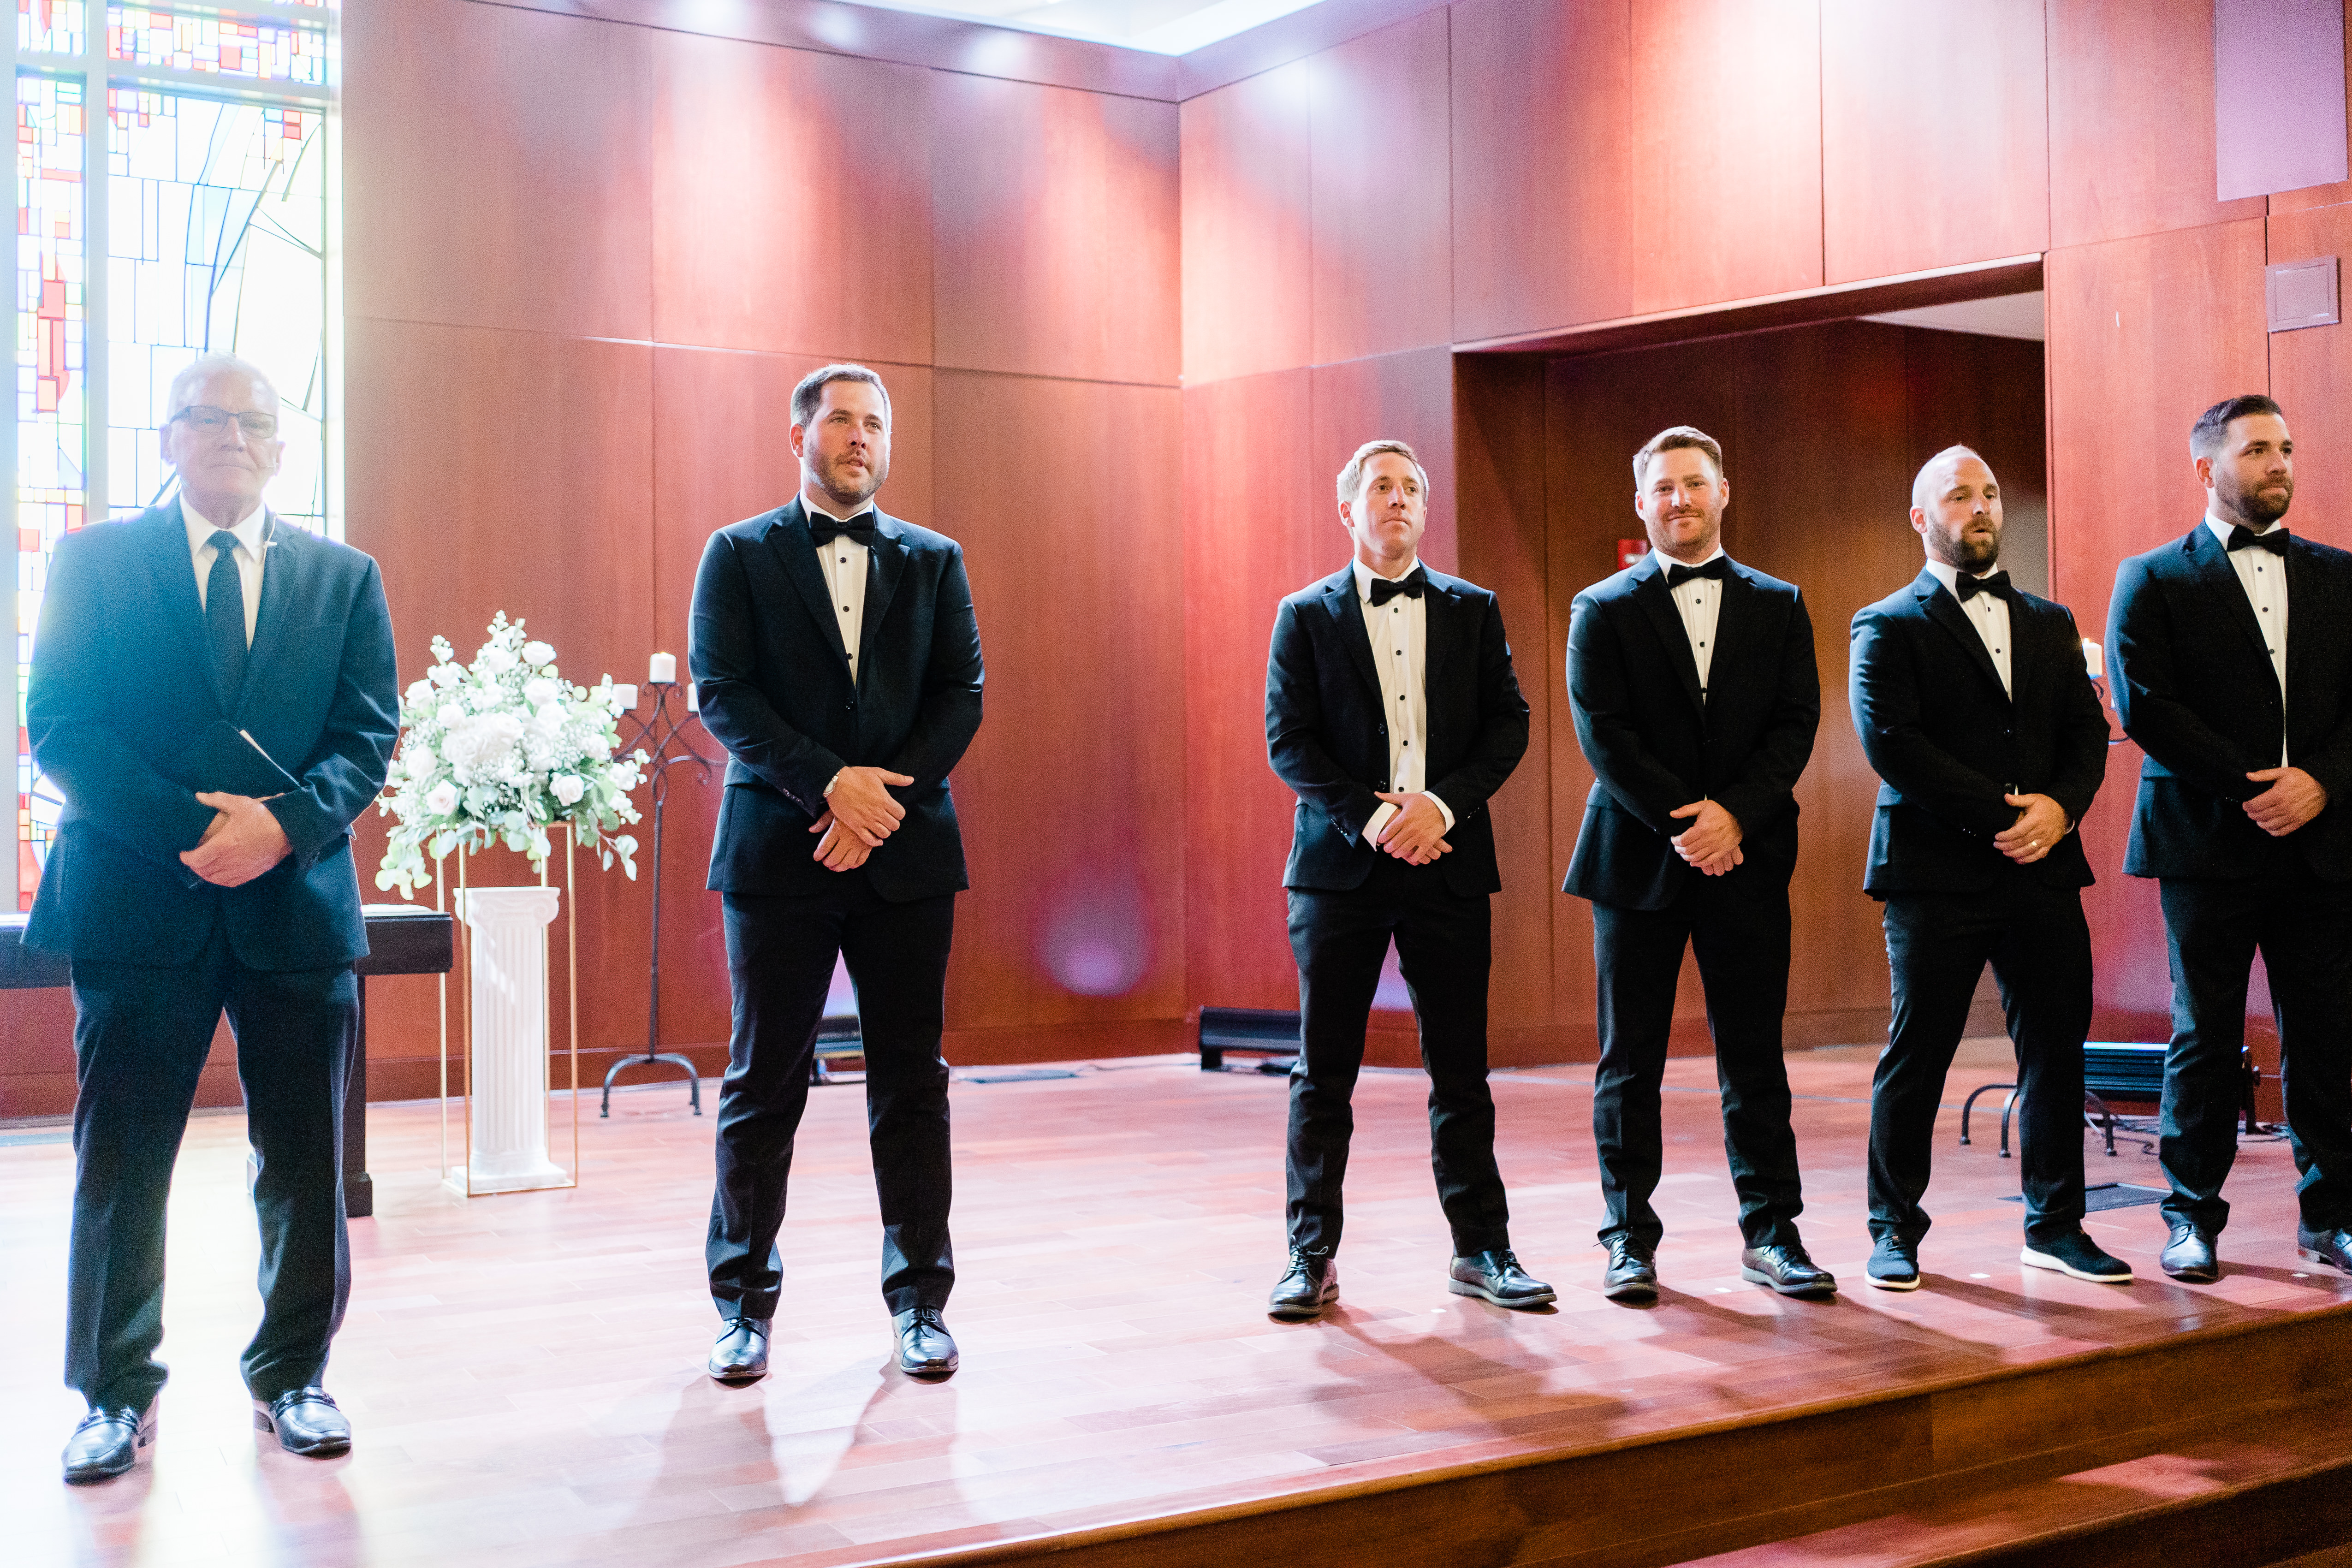 Fort Wayne wedding photographer captures groom standing with groomsmen waiting for bride to walk down aisle